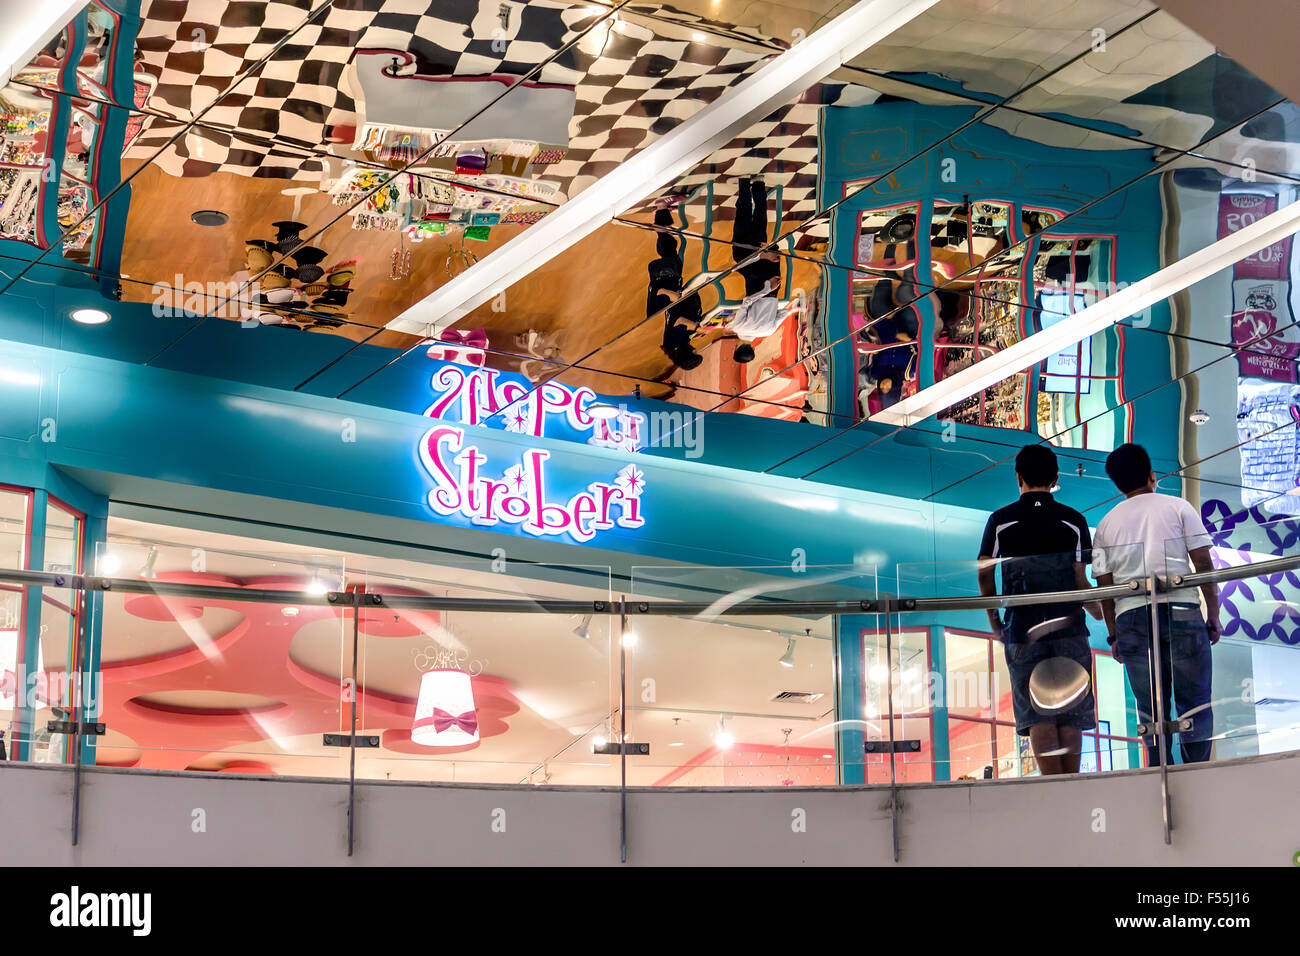 Indonesia, Jakarta, Shopping center, reflection, ceiling Stock Photo